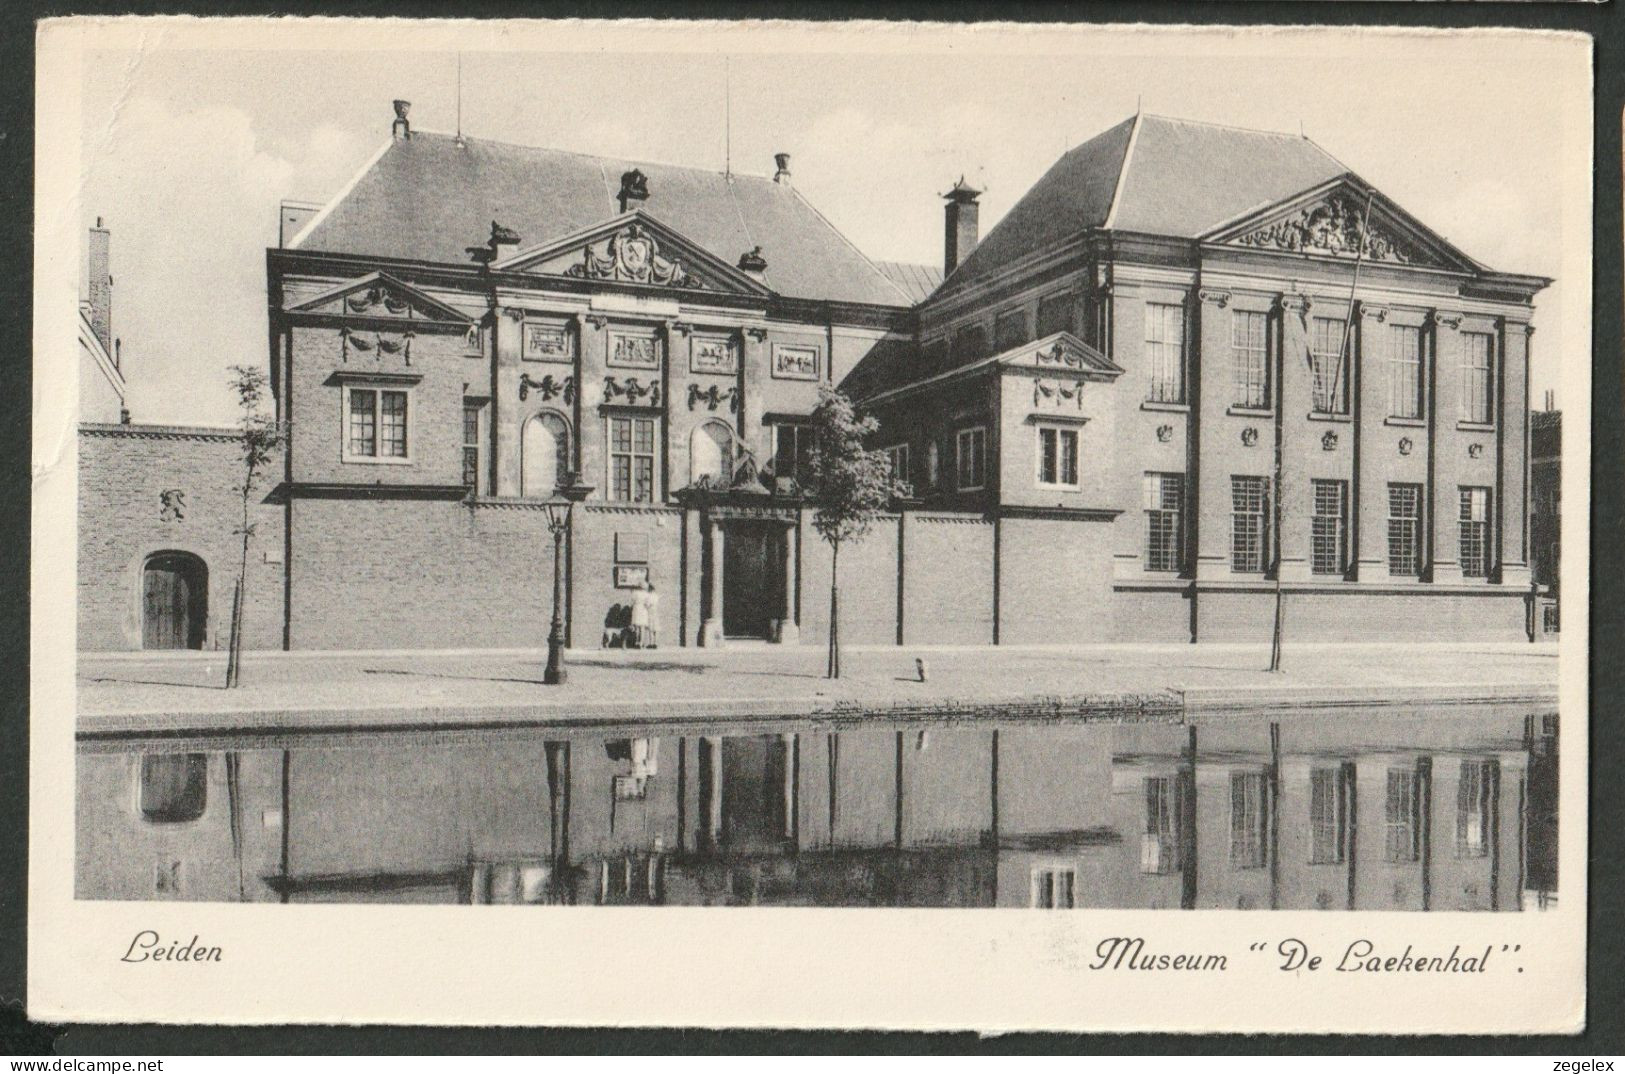 Leiden - Museum "De Lakenhal" - Leiden